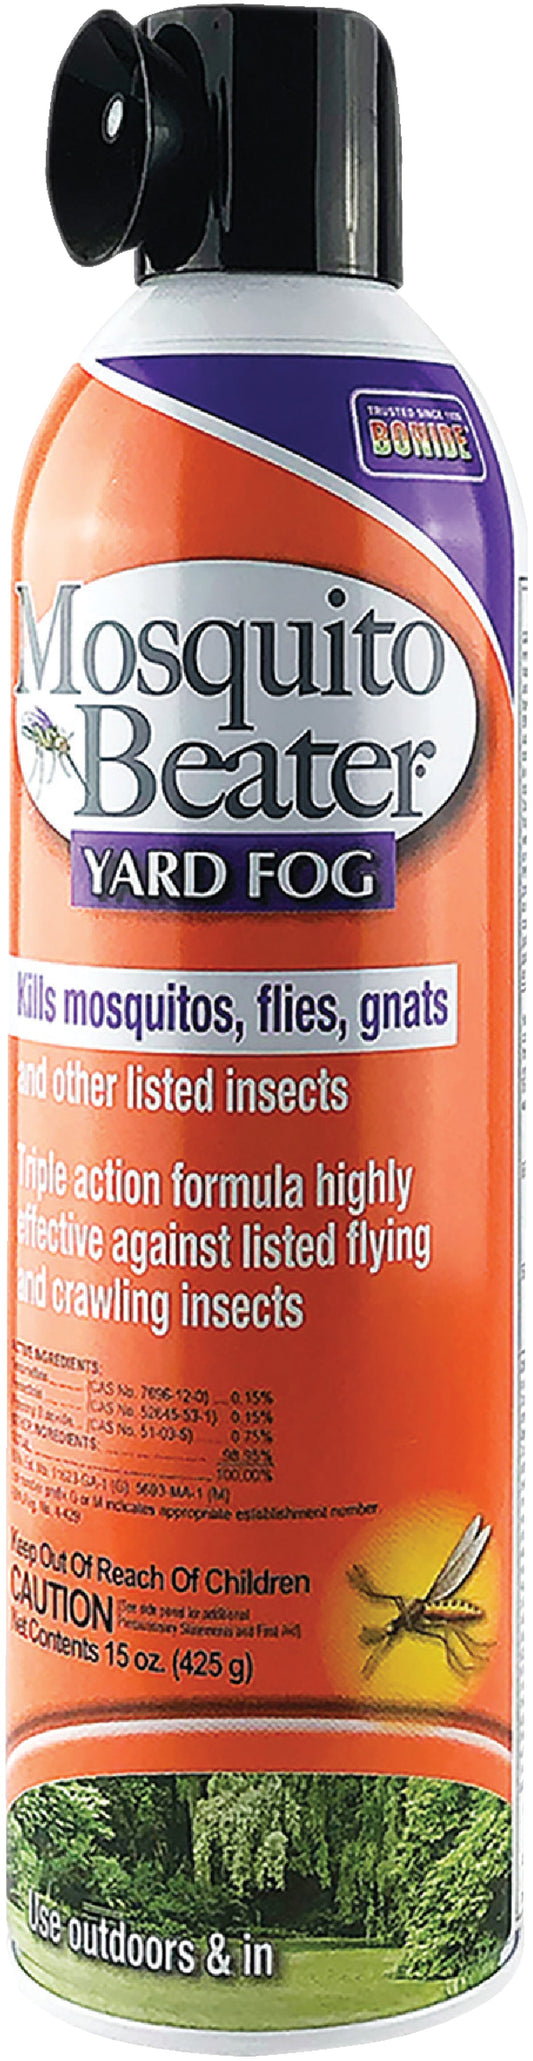 15oz Mosquito Beater Fogger